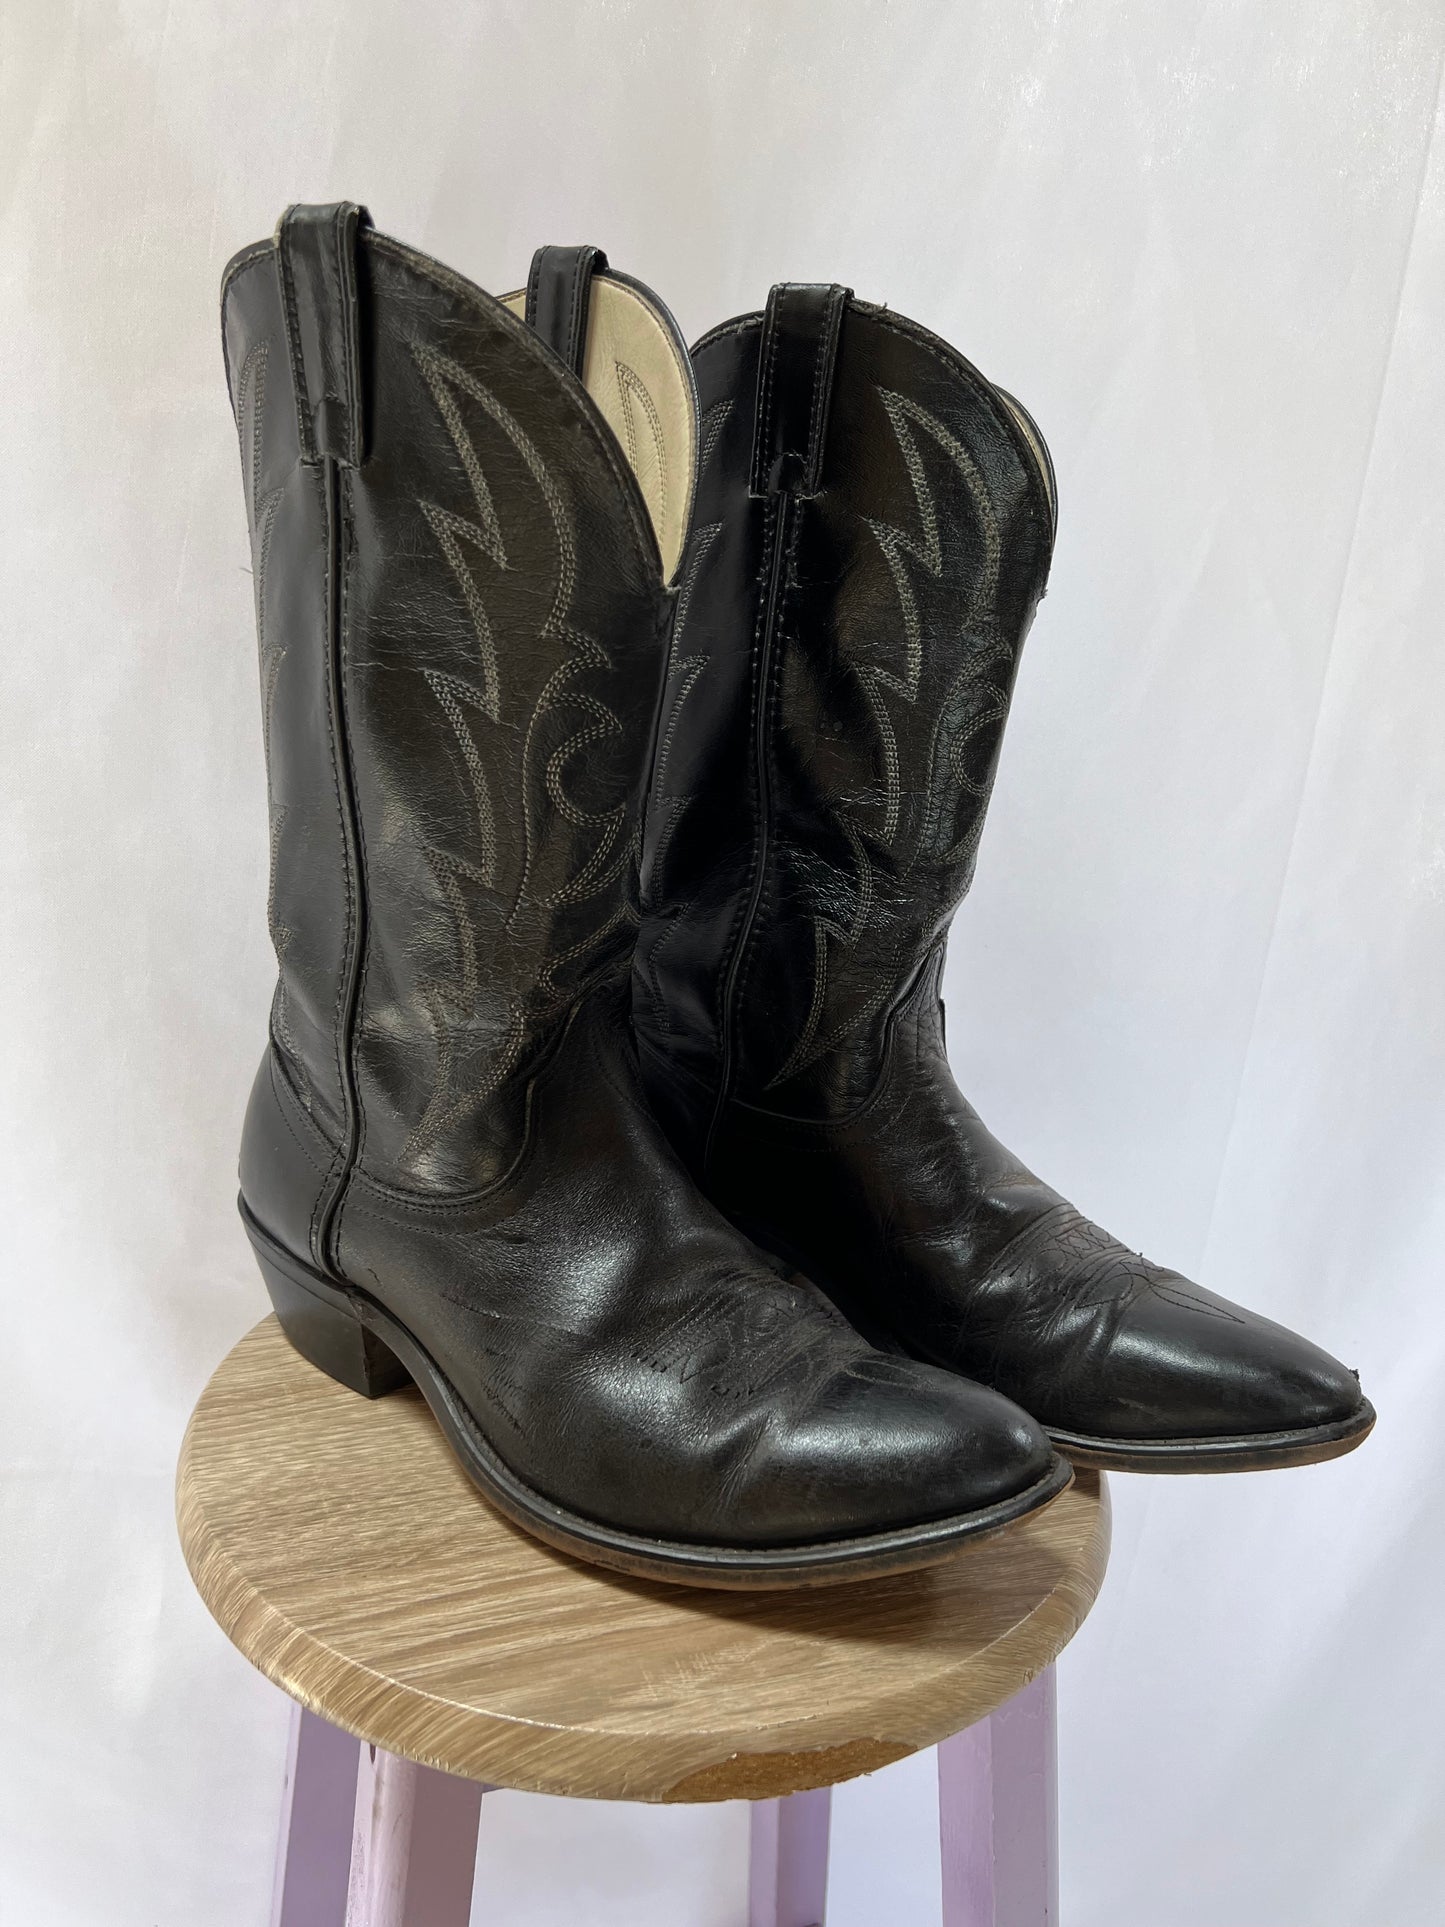 Black Leather Cowboy Boots - 8.5/9